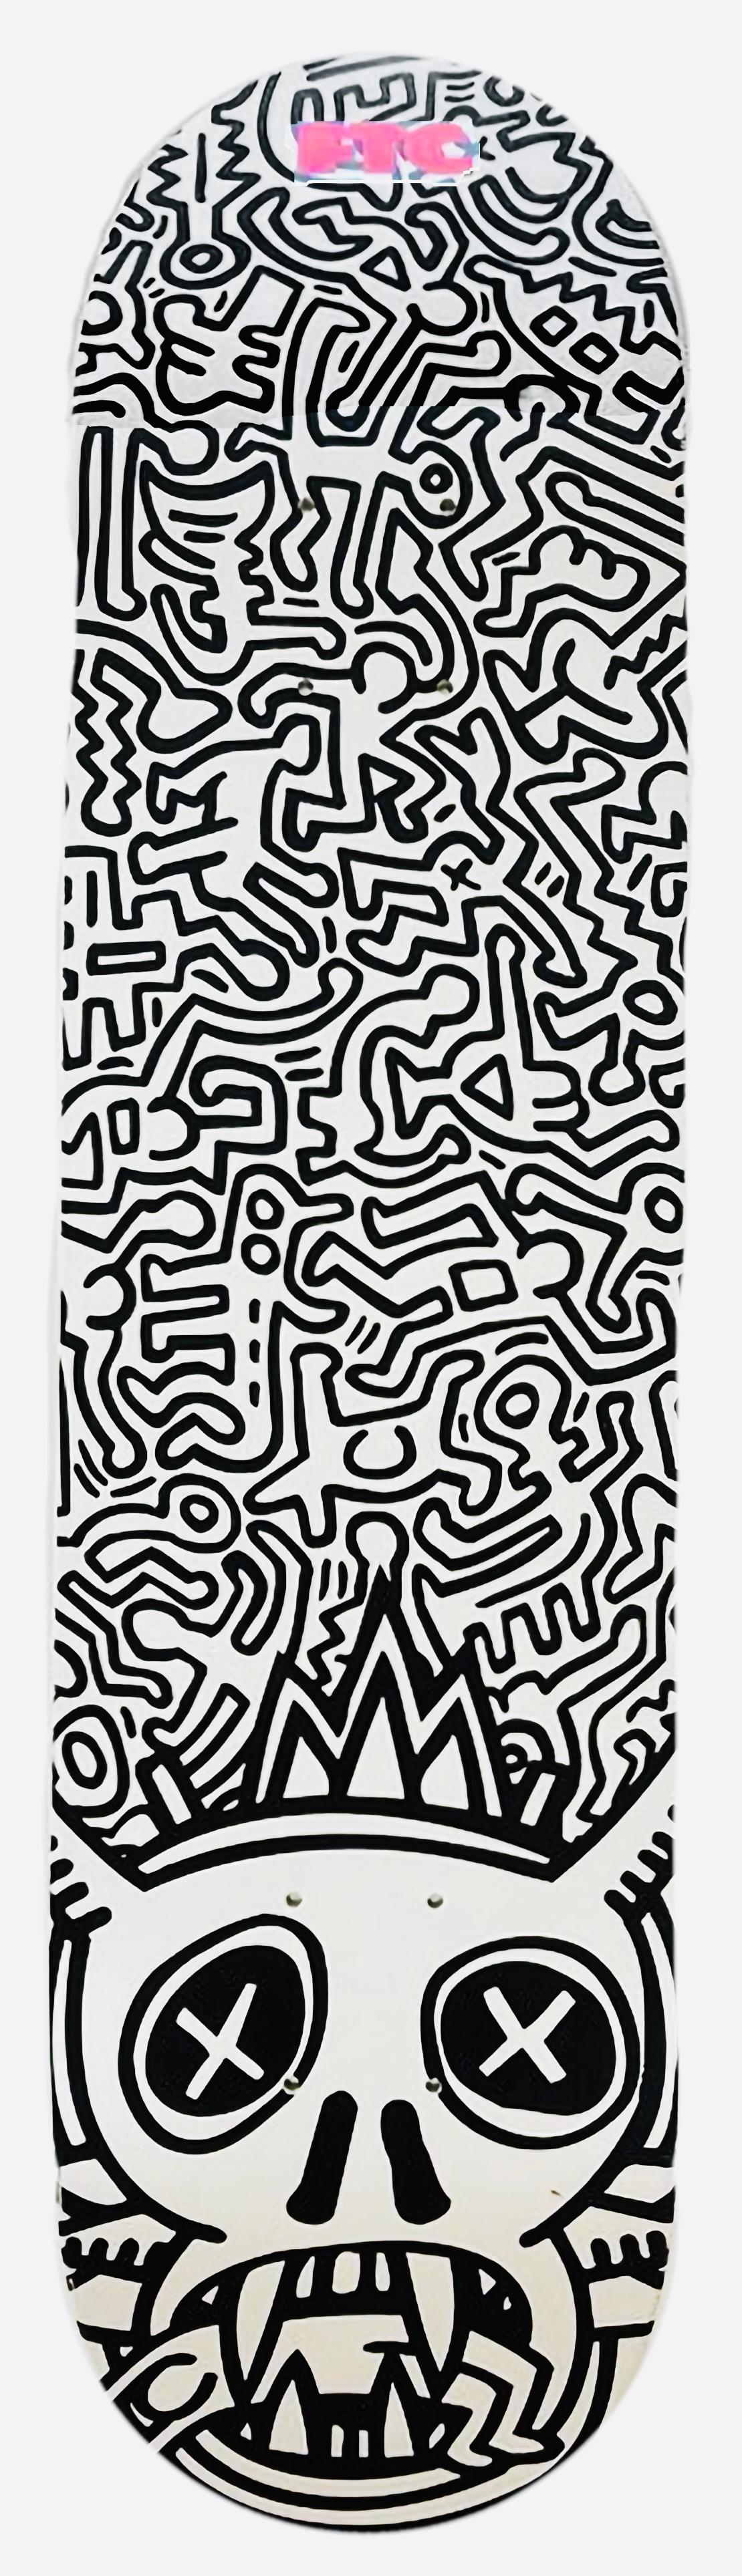 Voiture de skateboard vintage Keith Haring (Keith Haring Voiture de skateboard) - Pop Art Print par (after) Keith Haring